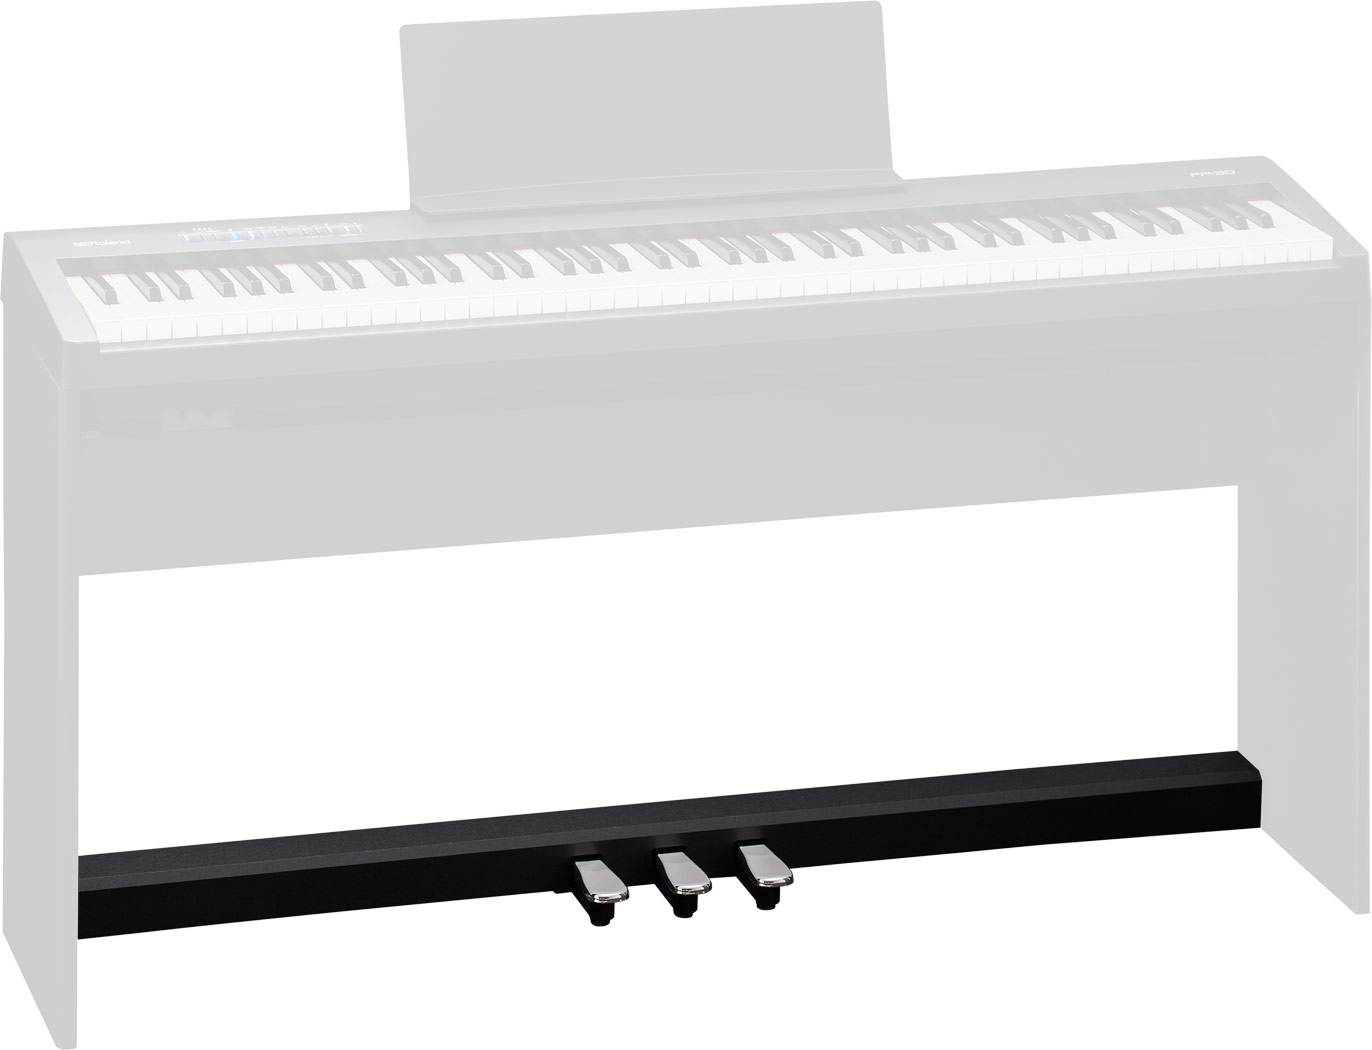 Roland KPD-70-BK Pedal Unit for FP-30 Digital Piano